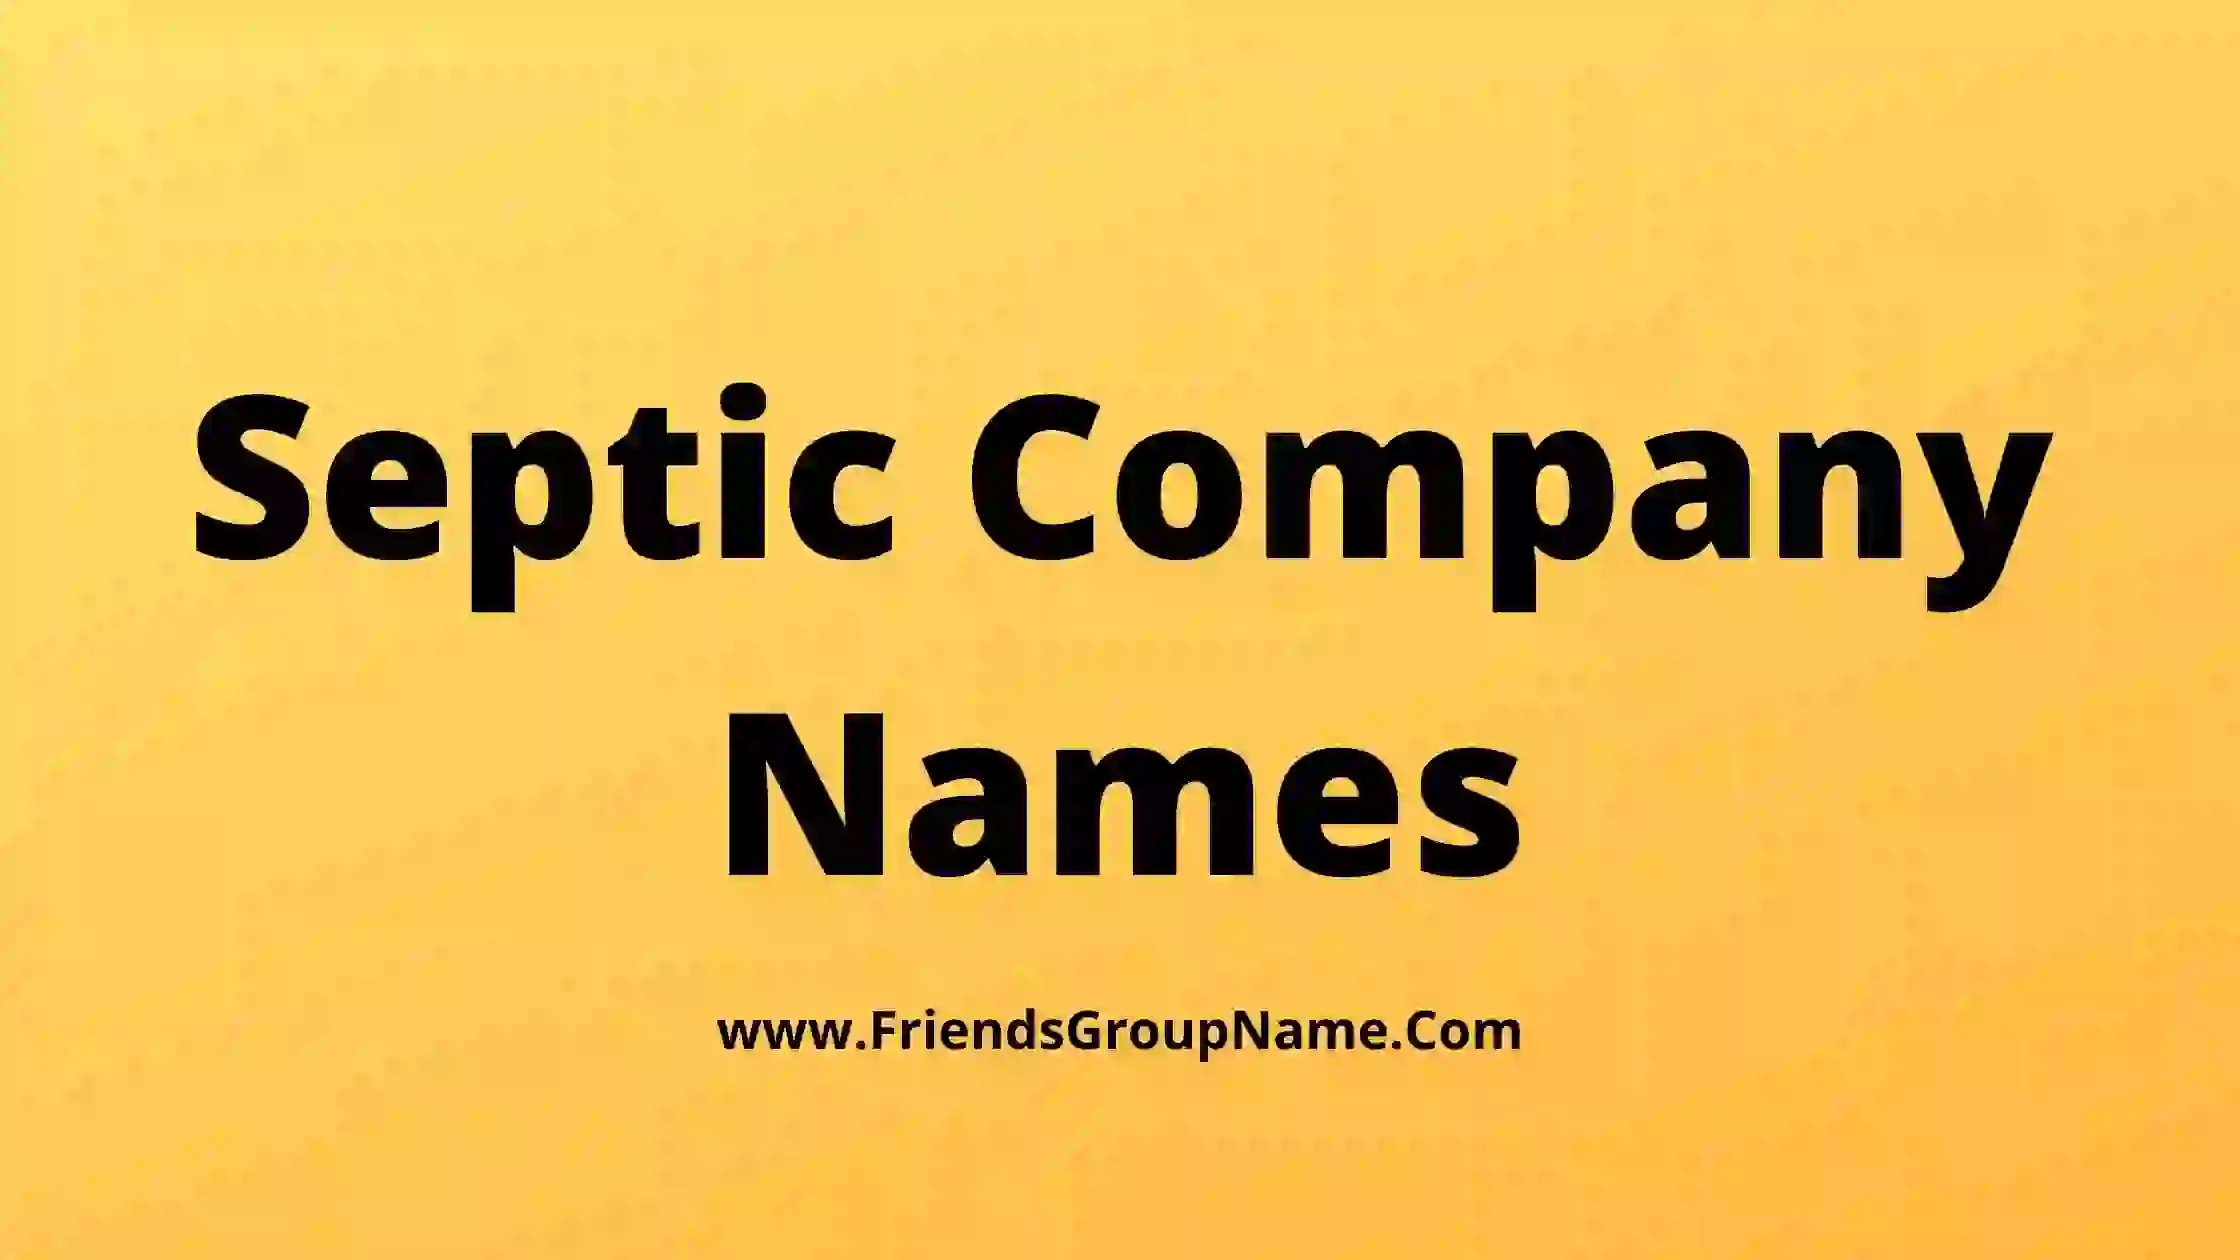 Septic Company Names